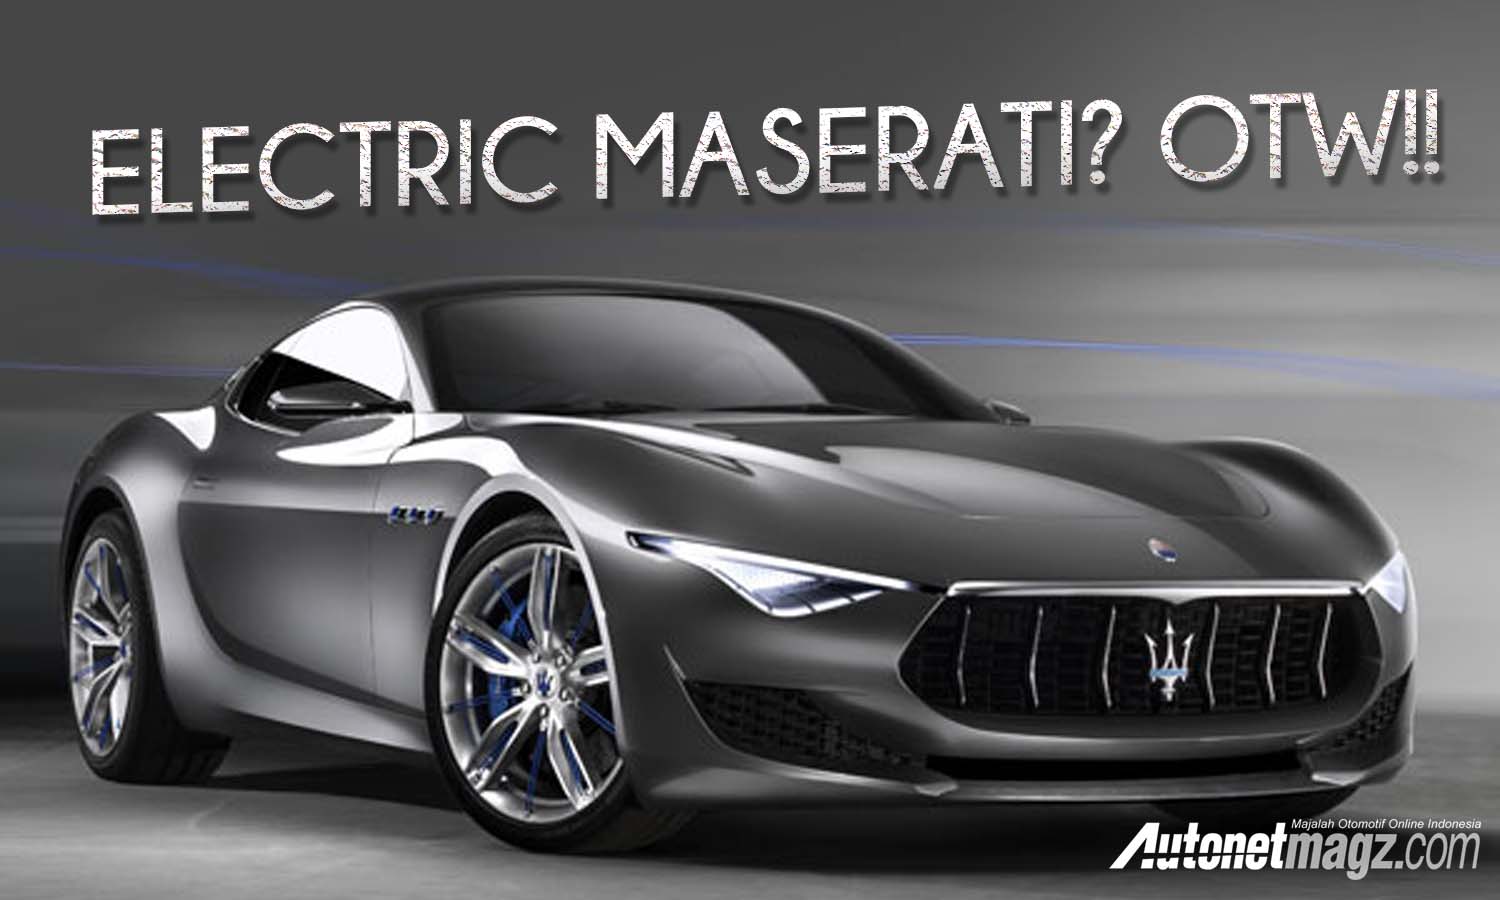 Berita, maserati listrik: Mobil Sport Listrik Maserati Sedang Dikembangkan, Rilis 2020